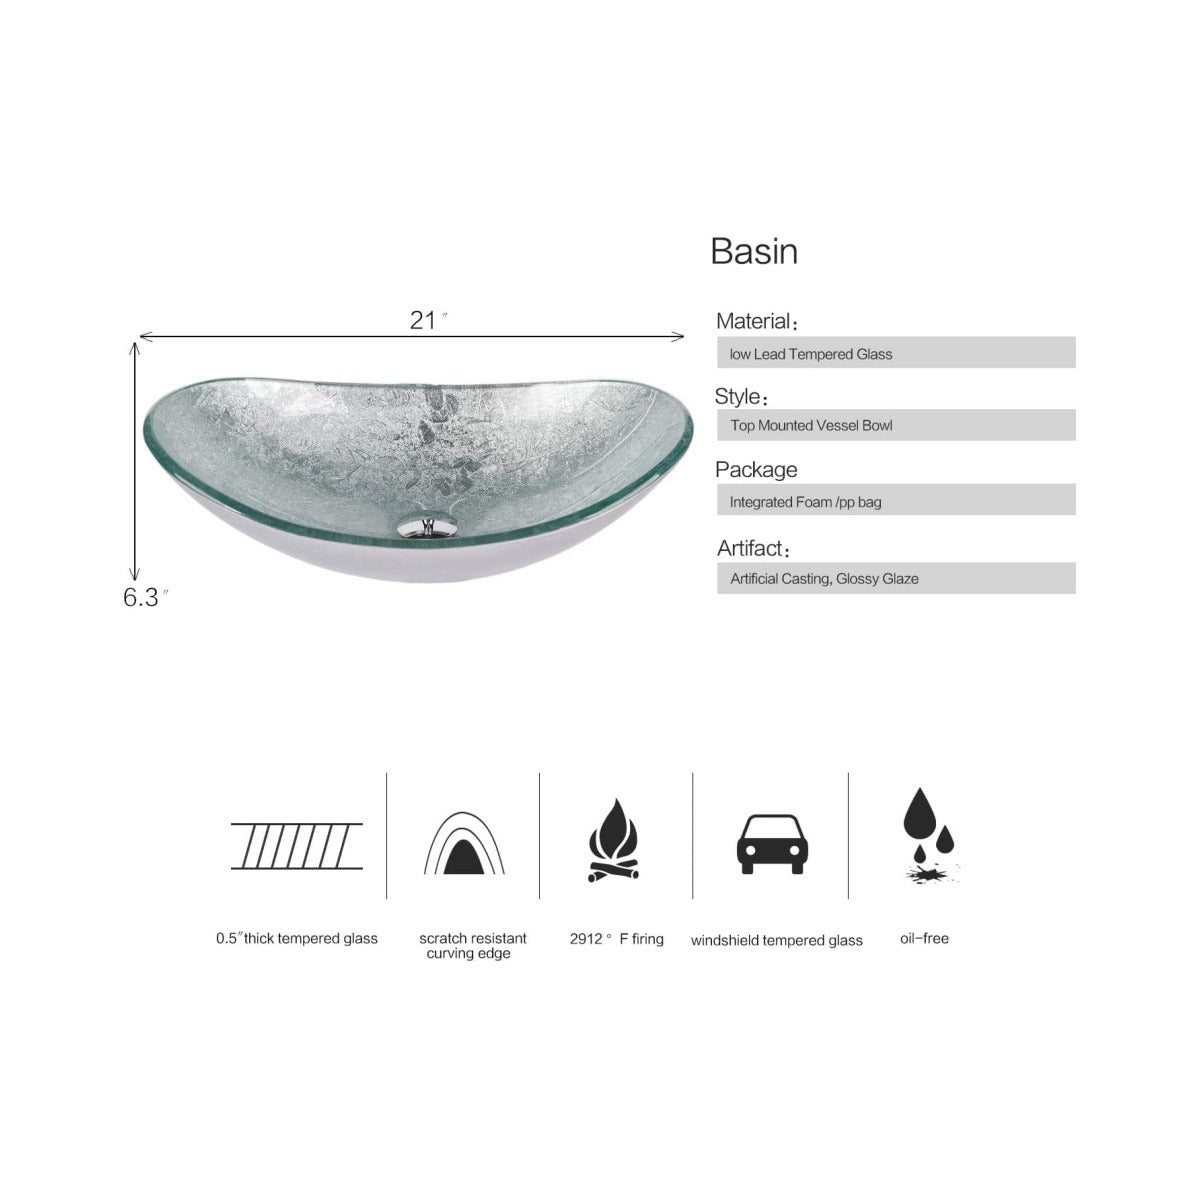 Elecwish Silver Boat Sink basin size and description